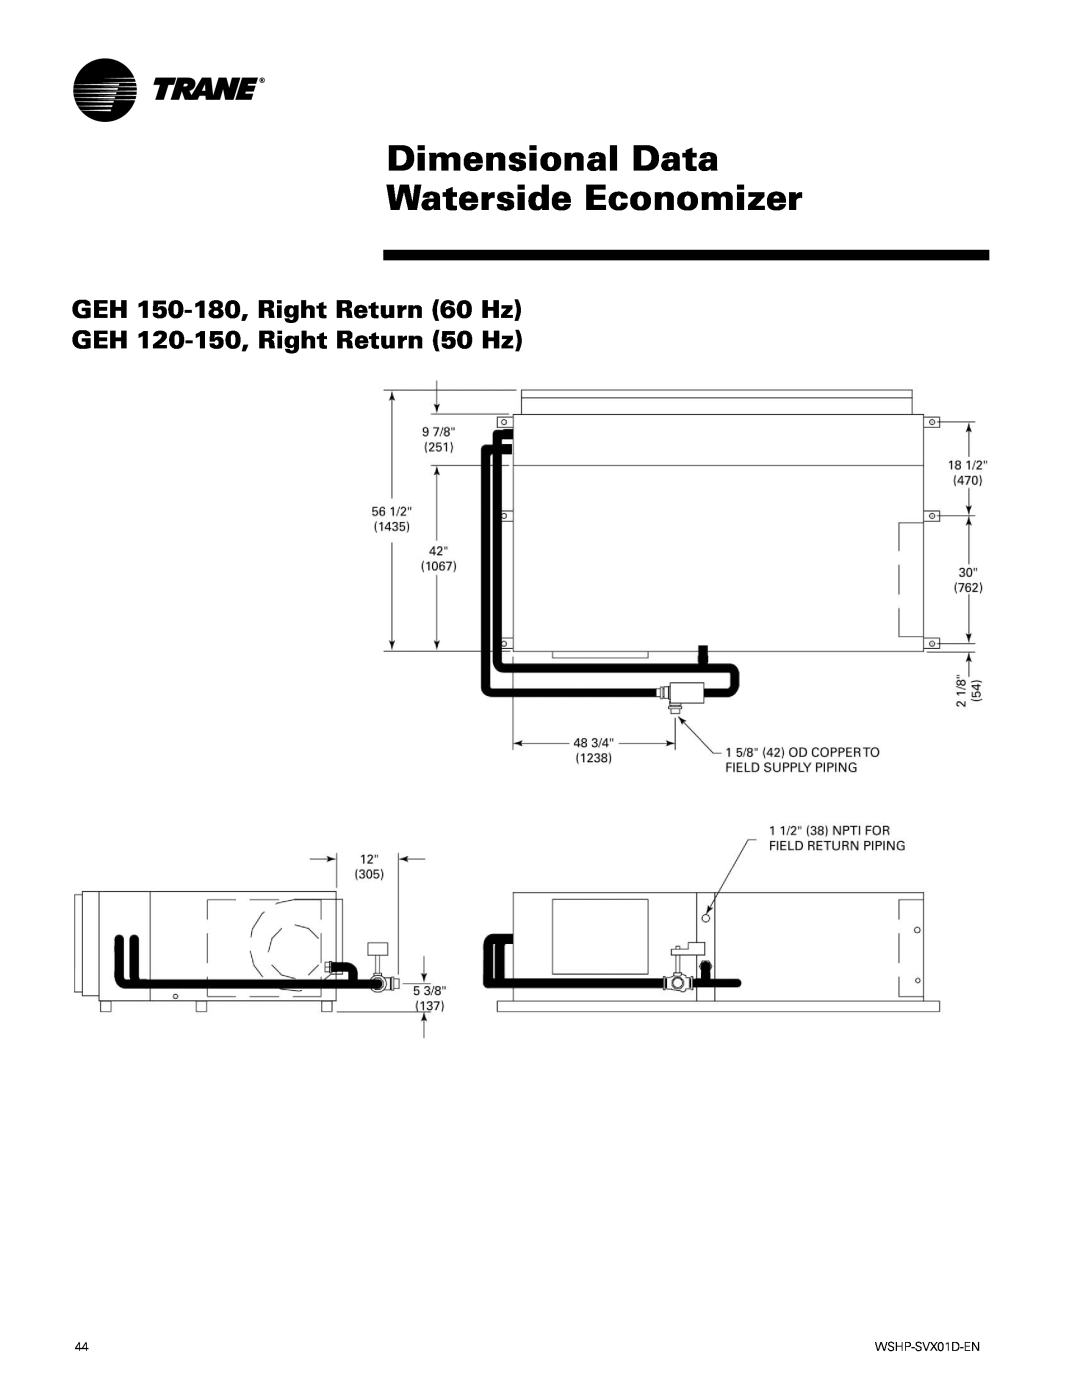 Trane GEV manual GEH 150-180,Right Return 60 Hz, GEH 120-150,Right Return 50 Hz, Dimensional Data Waterside Economizer 